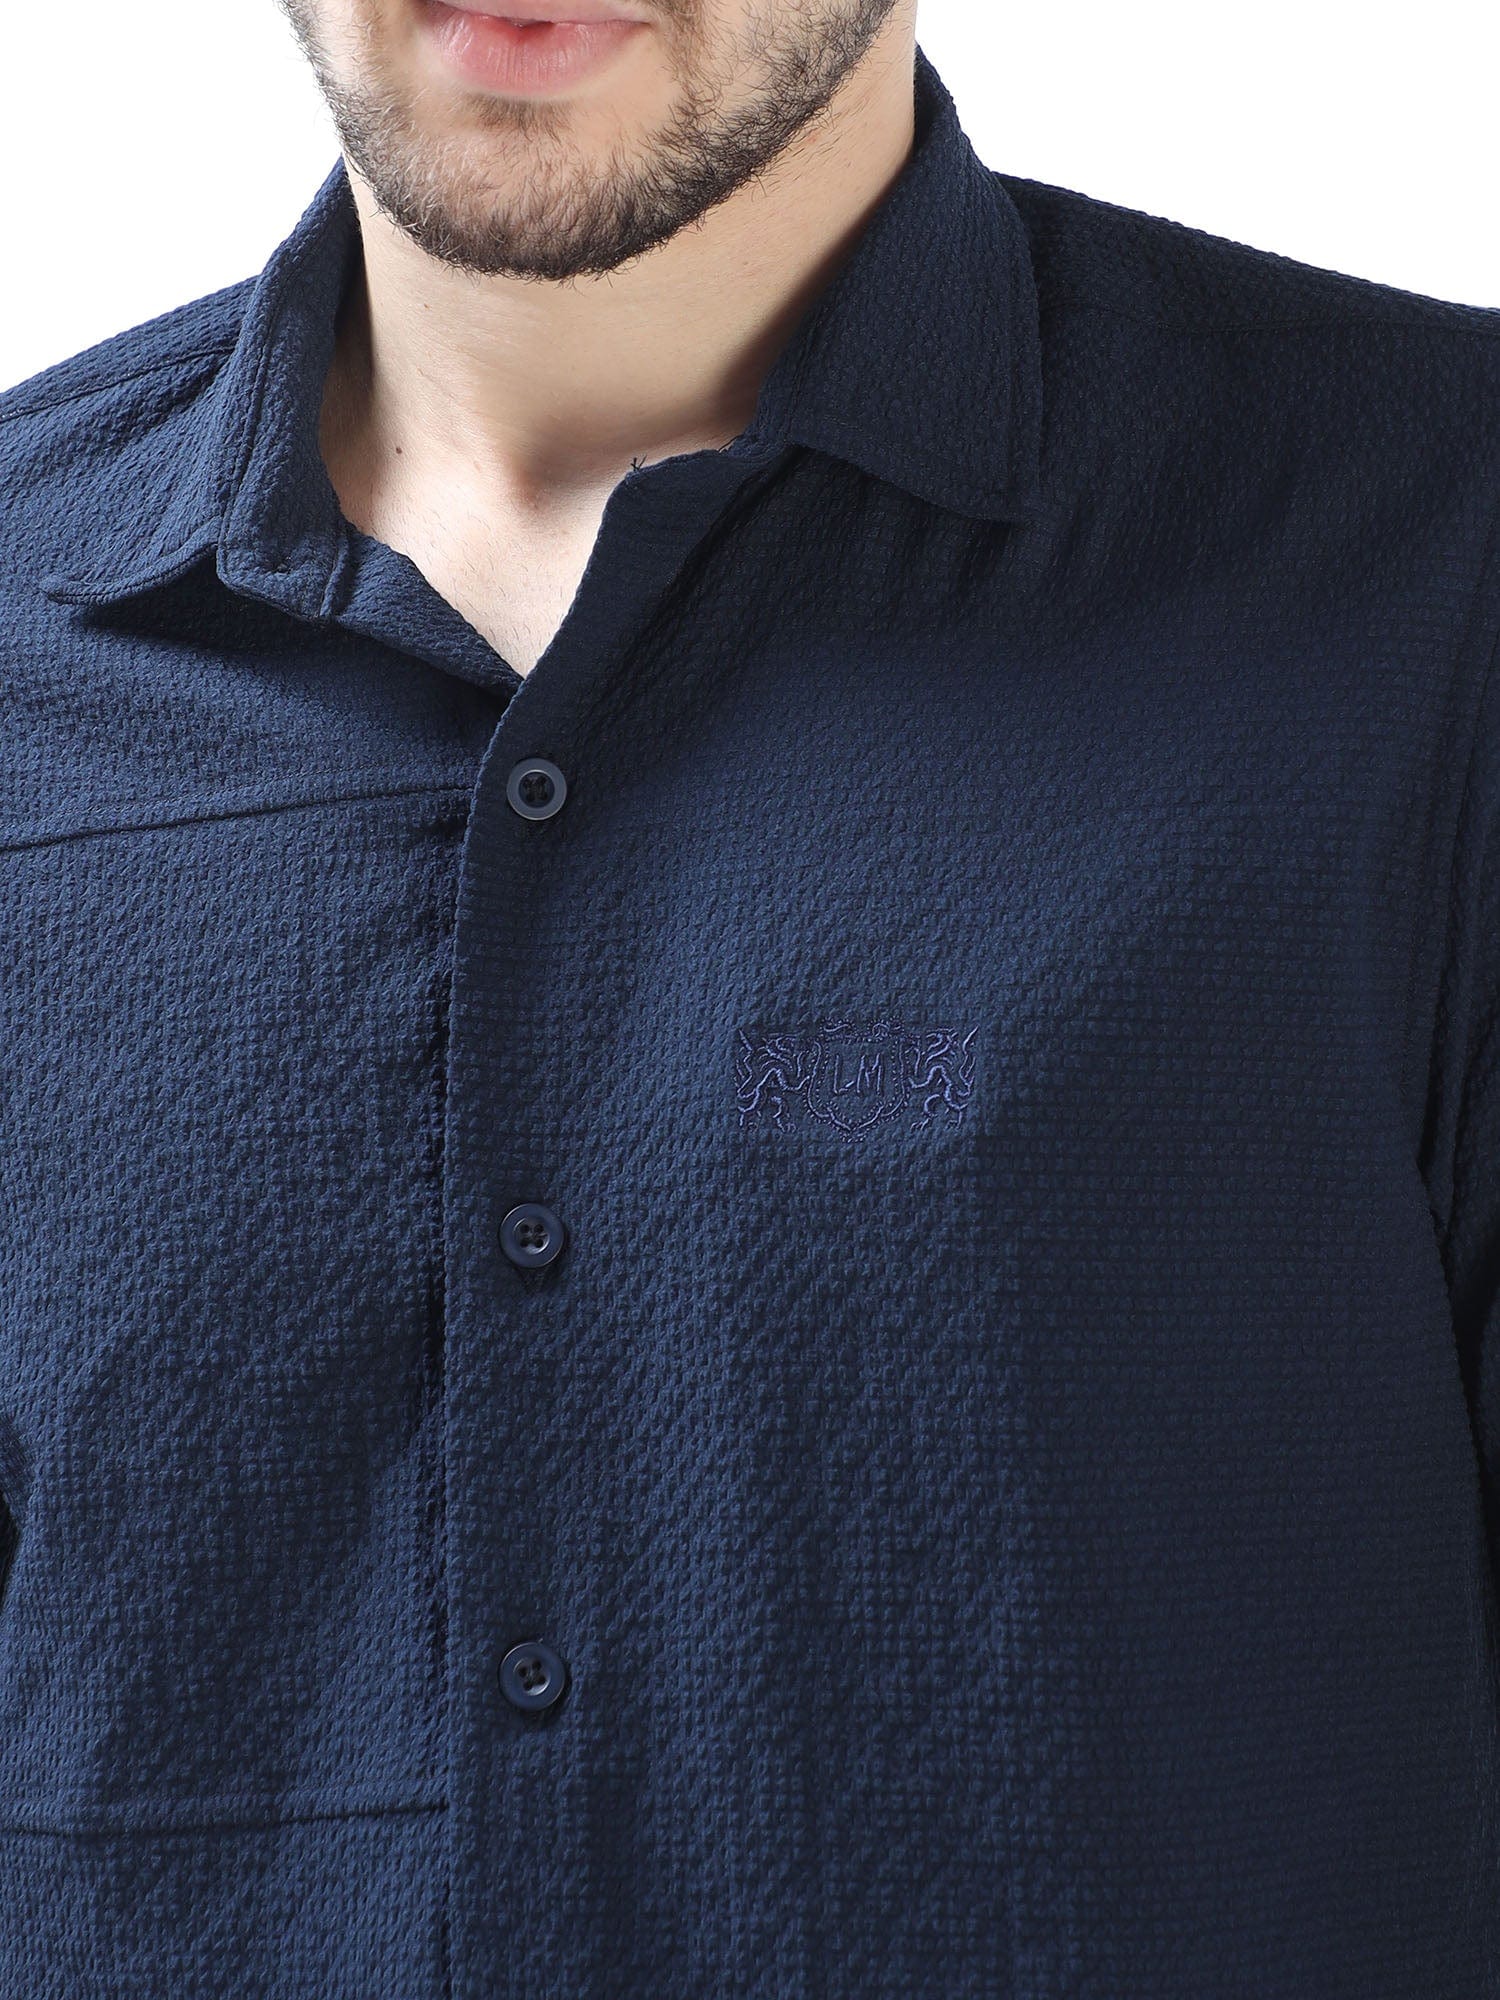 Buy Stylish Midnight Dark Blue Full Sleeve Shirt OnlineRs. 1349.00